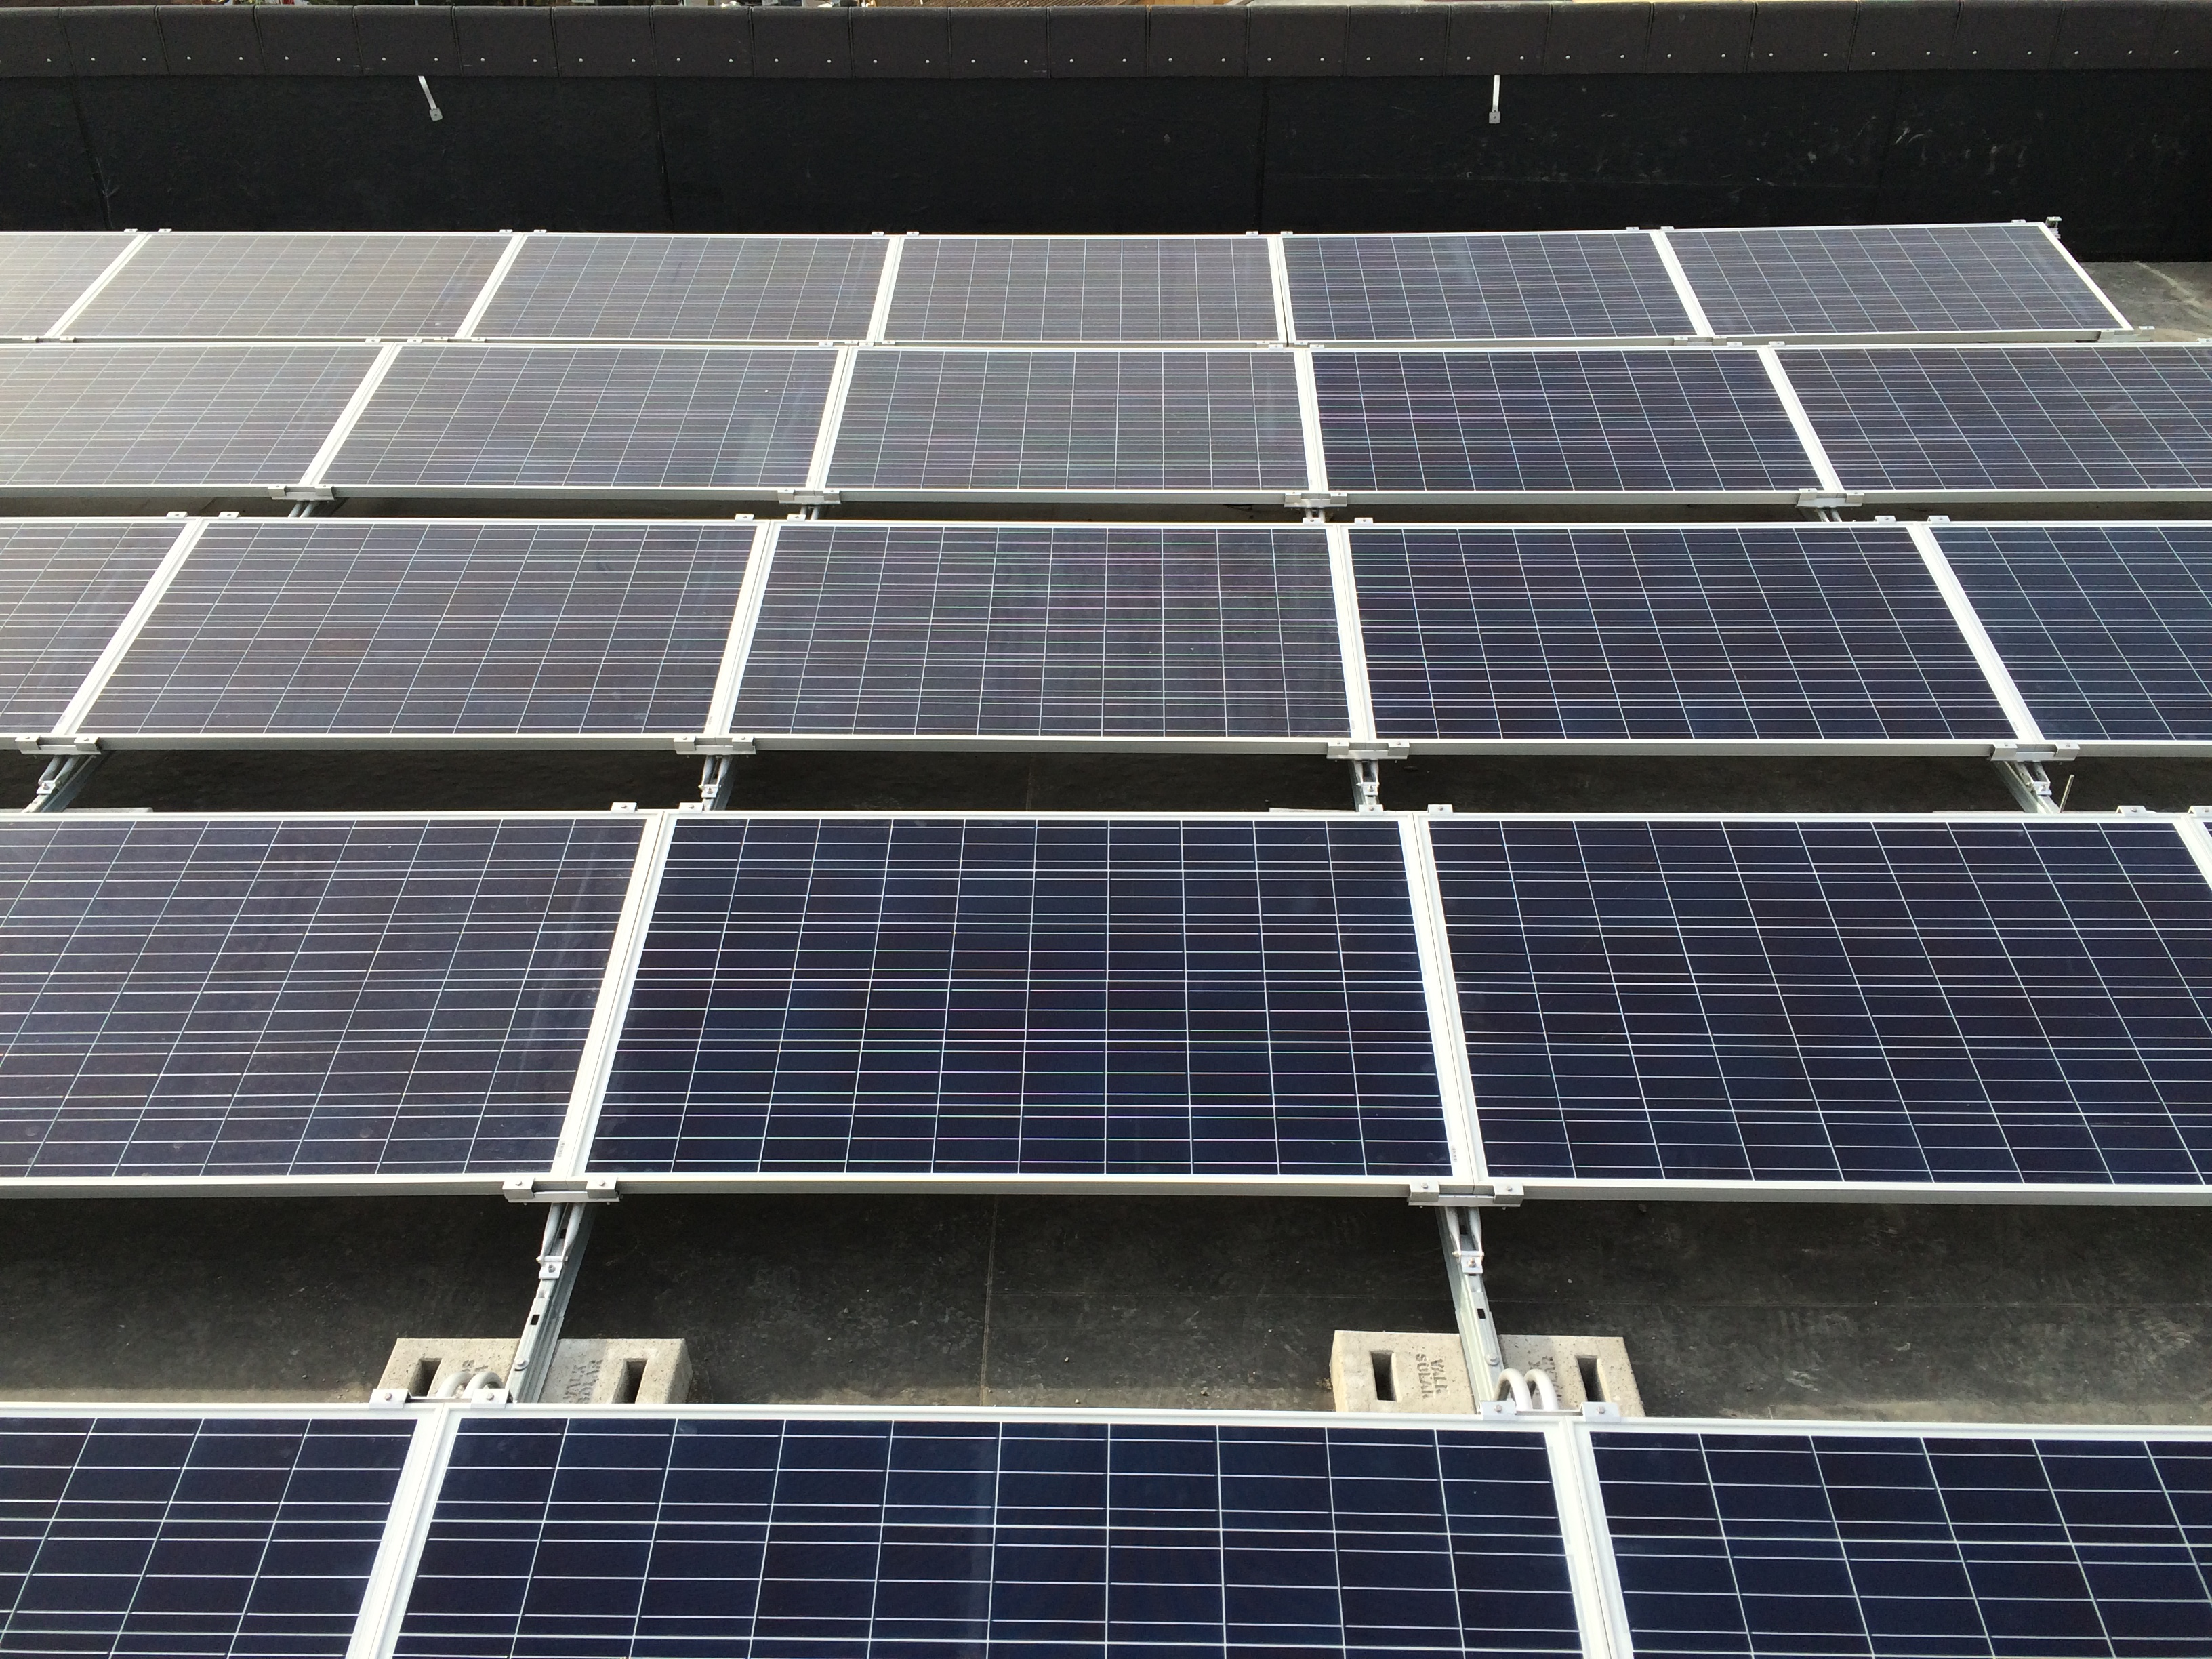 Solar Pv Installers England, London, Solar PV, Solar Panels, Commercial Solar PV